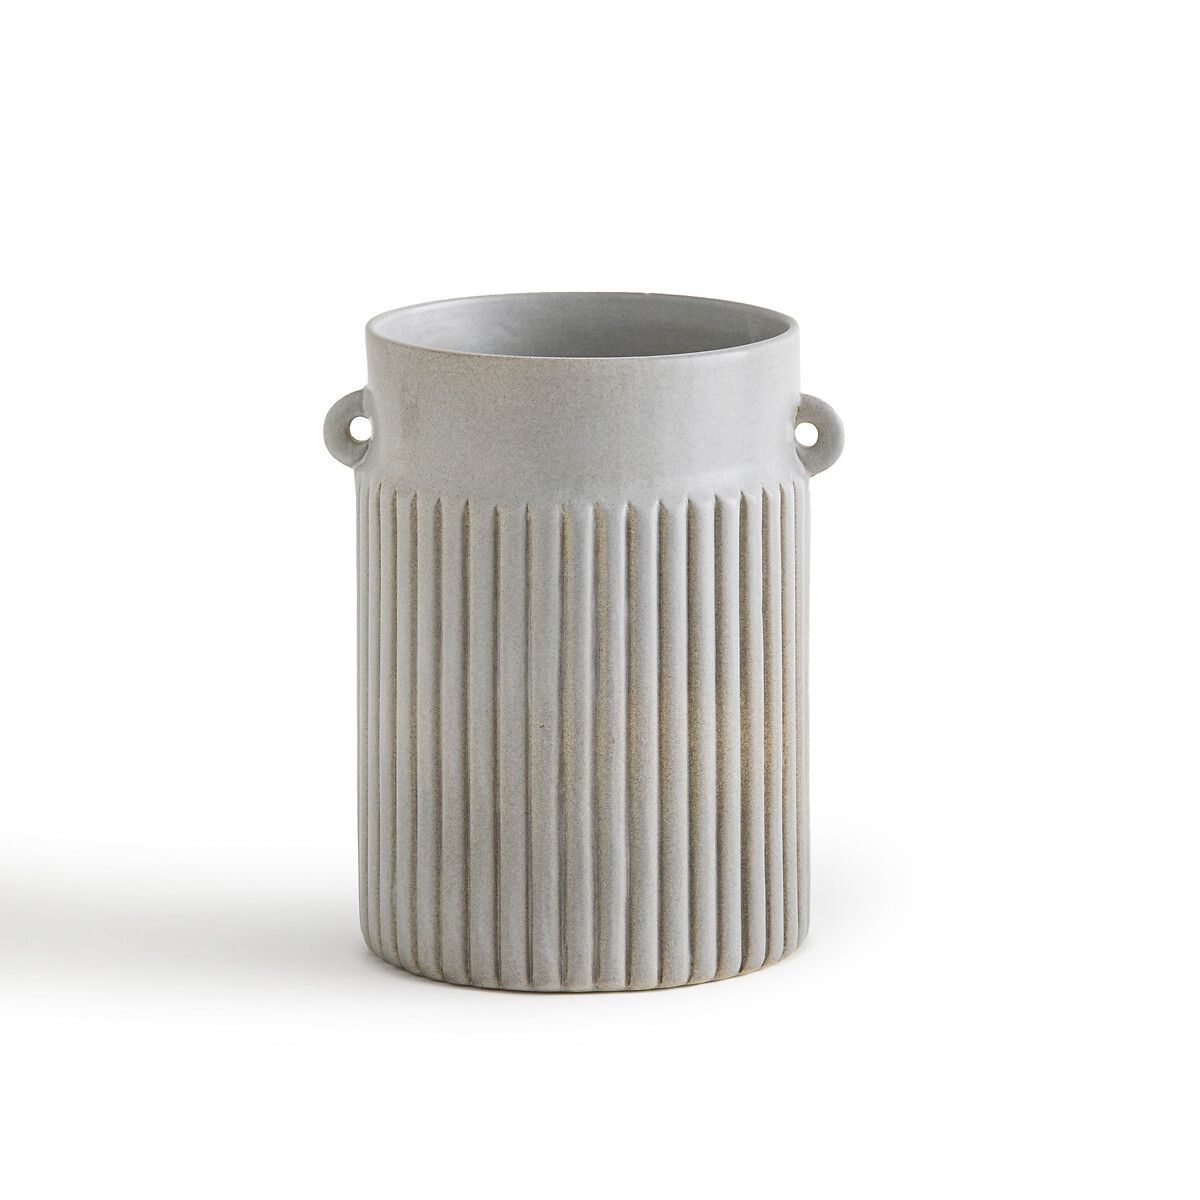 Almada Low Ceramic Vase | La Redoute (UK)